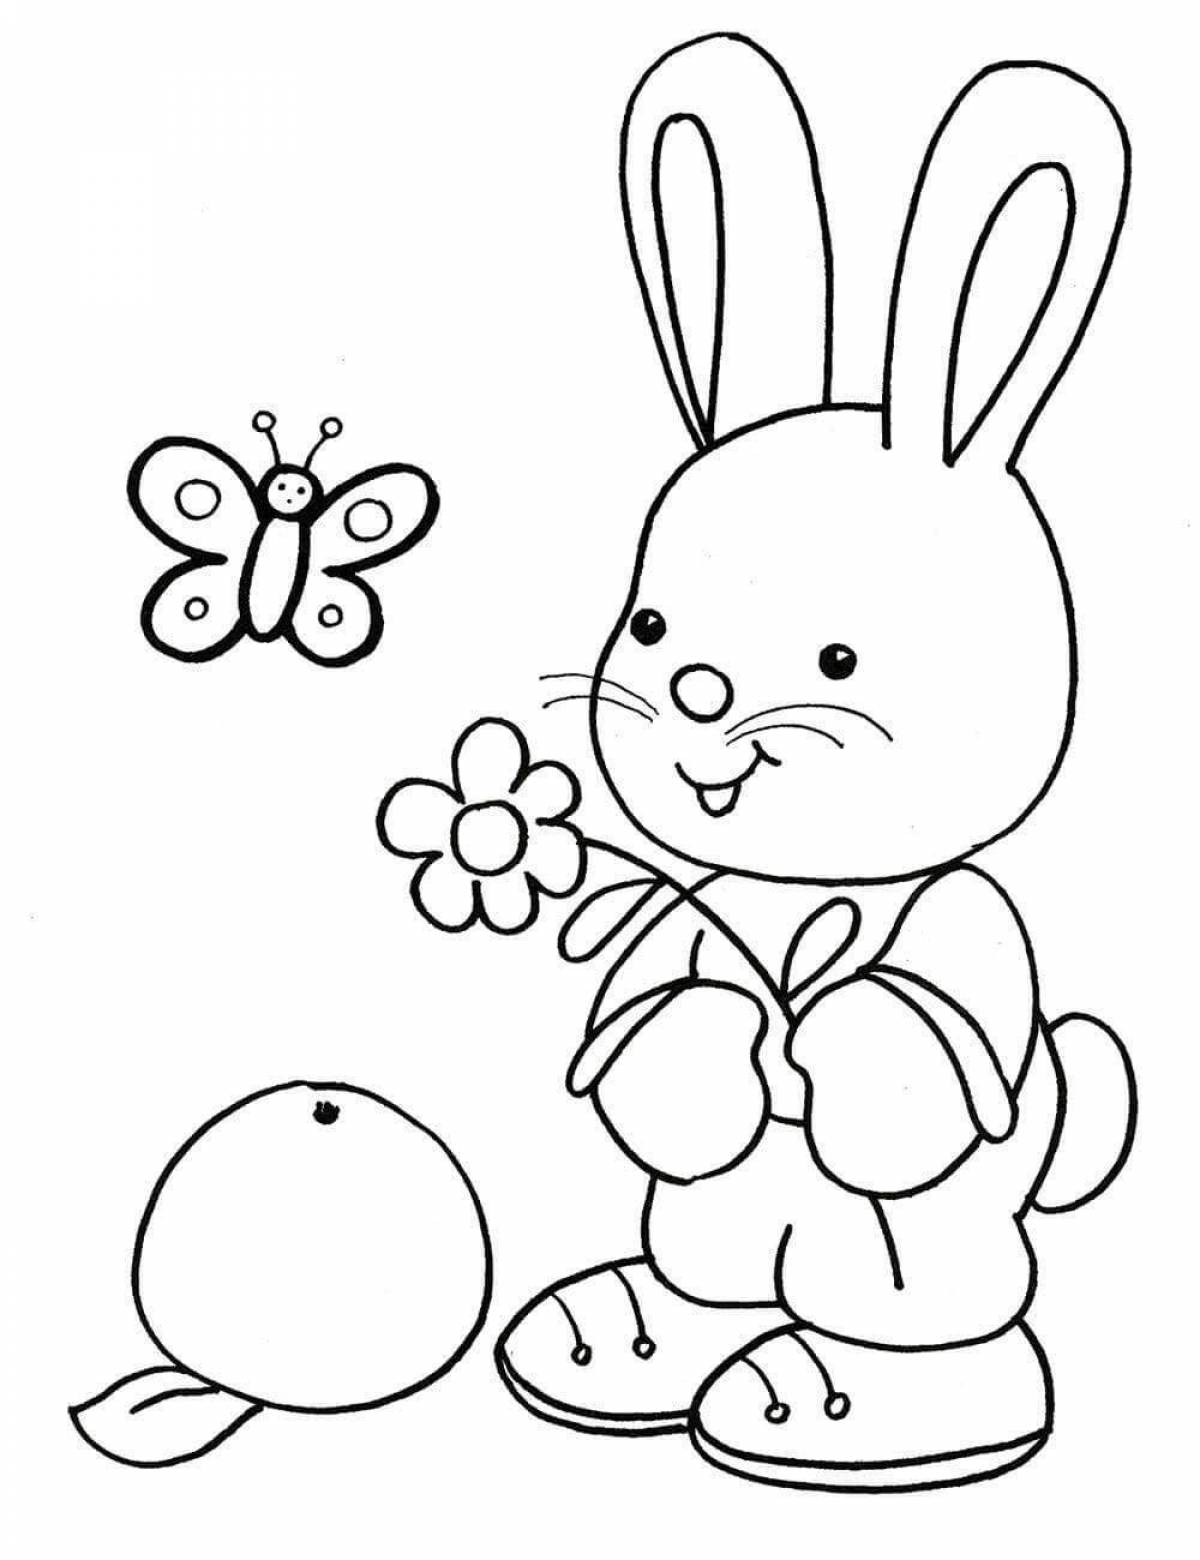 Color-frenzy coloring page для детей 2-3 лет